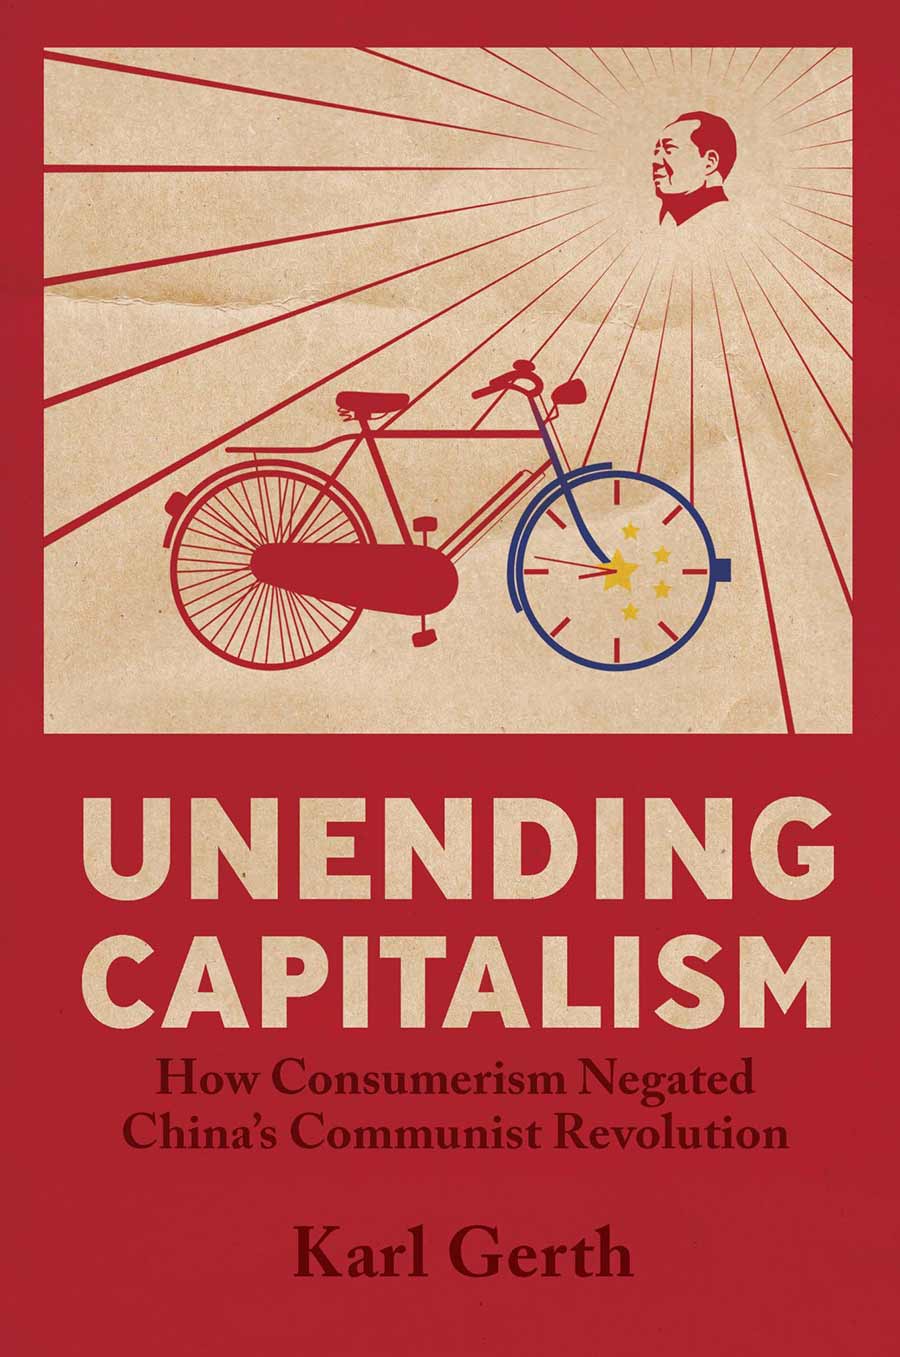 Unending Capitalist book cover.